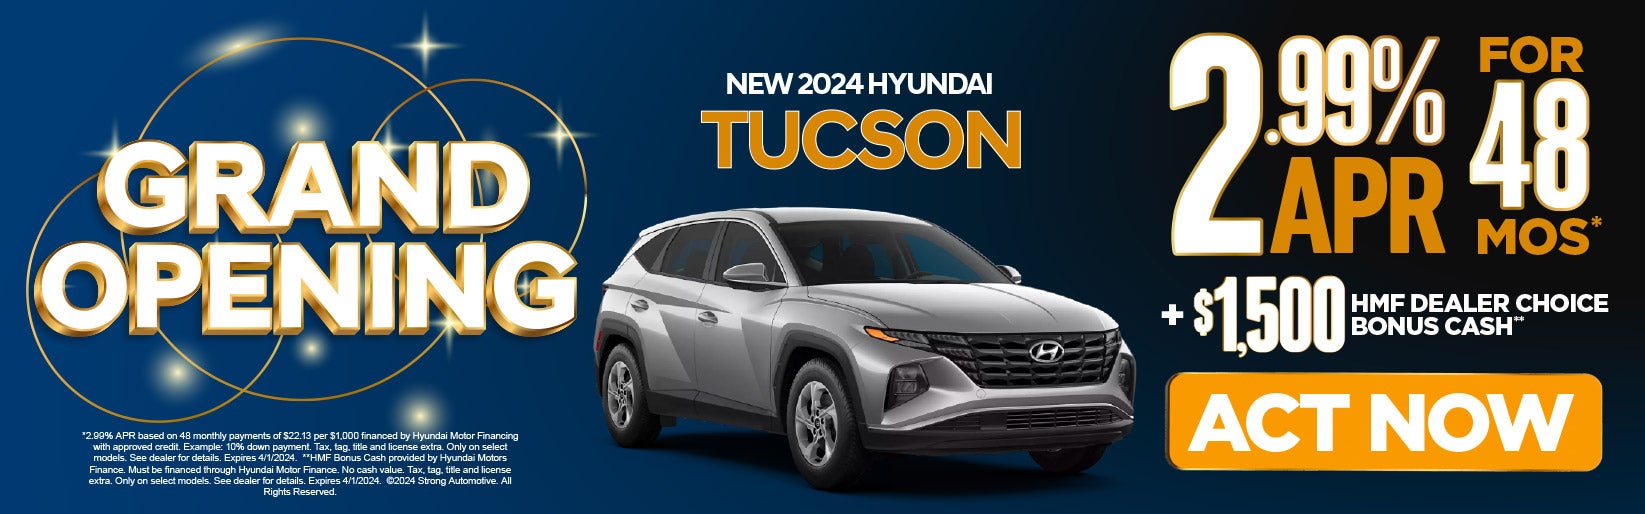 New 2024 Hyundai Tucson 2.99% APR for 48 Mos*